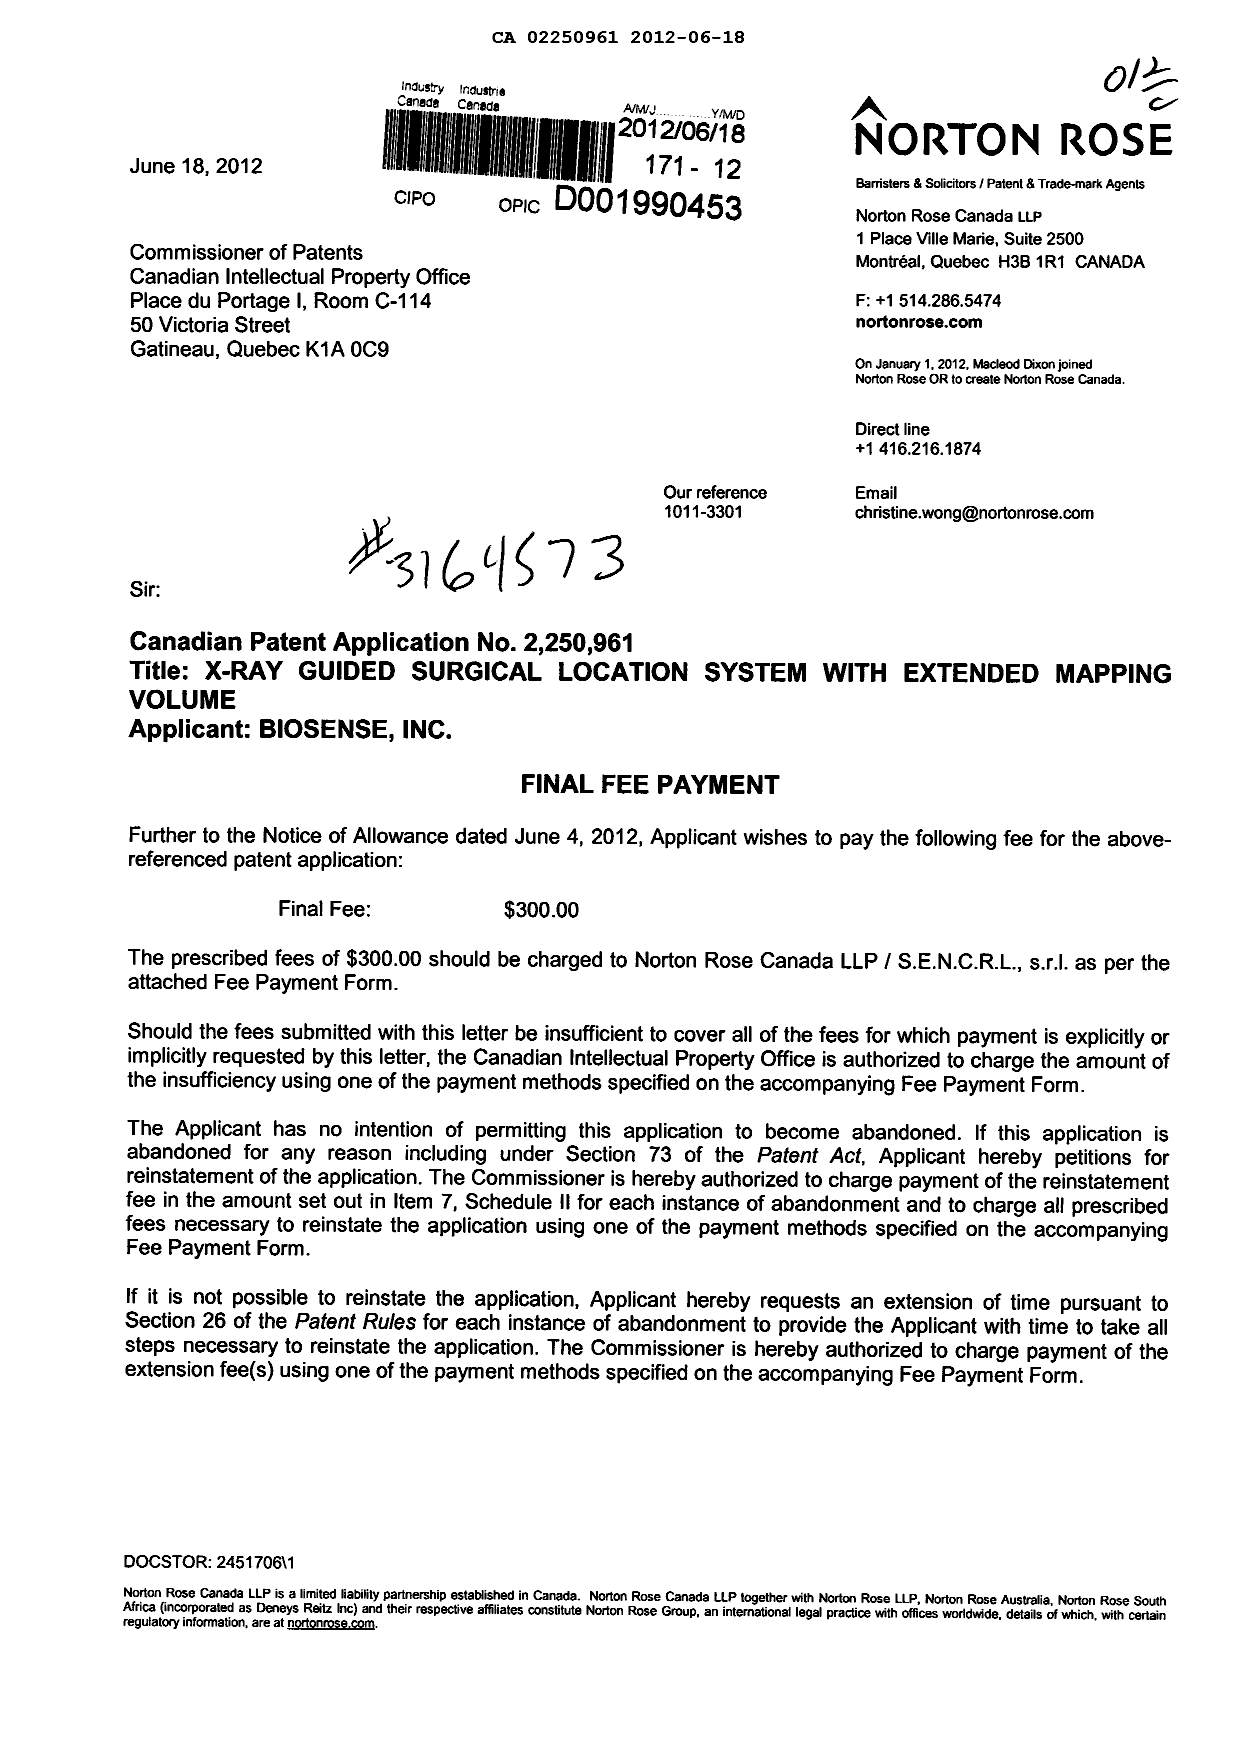 Canadian Patent Document 2250961. Correspondence 20120618. Image 1 of 2